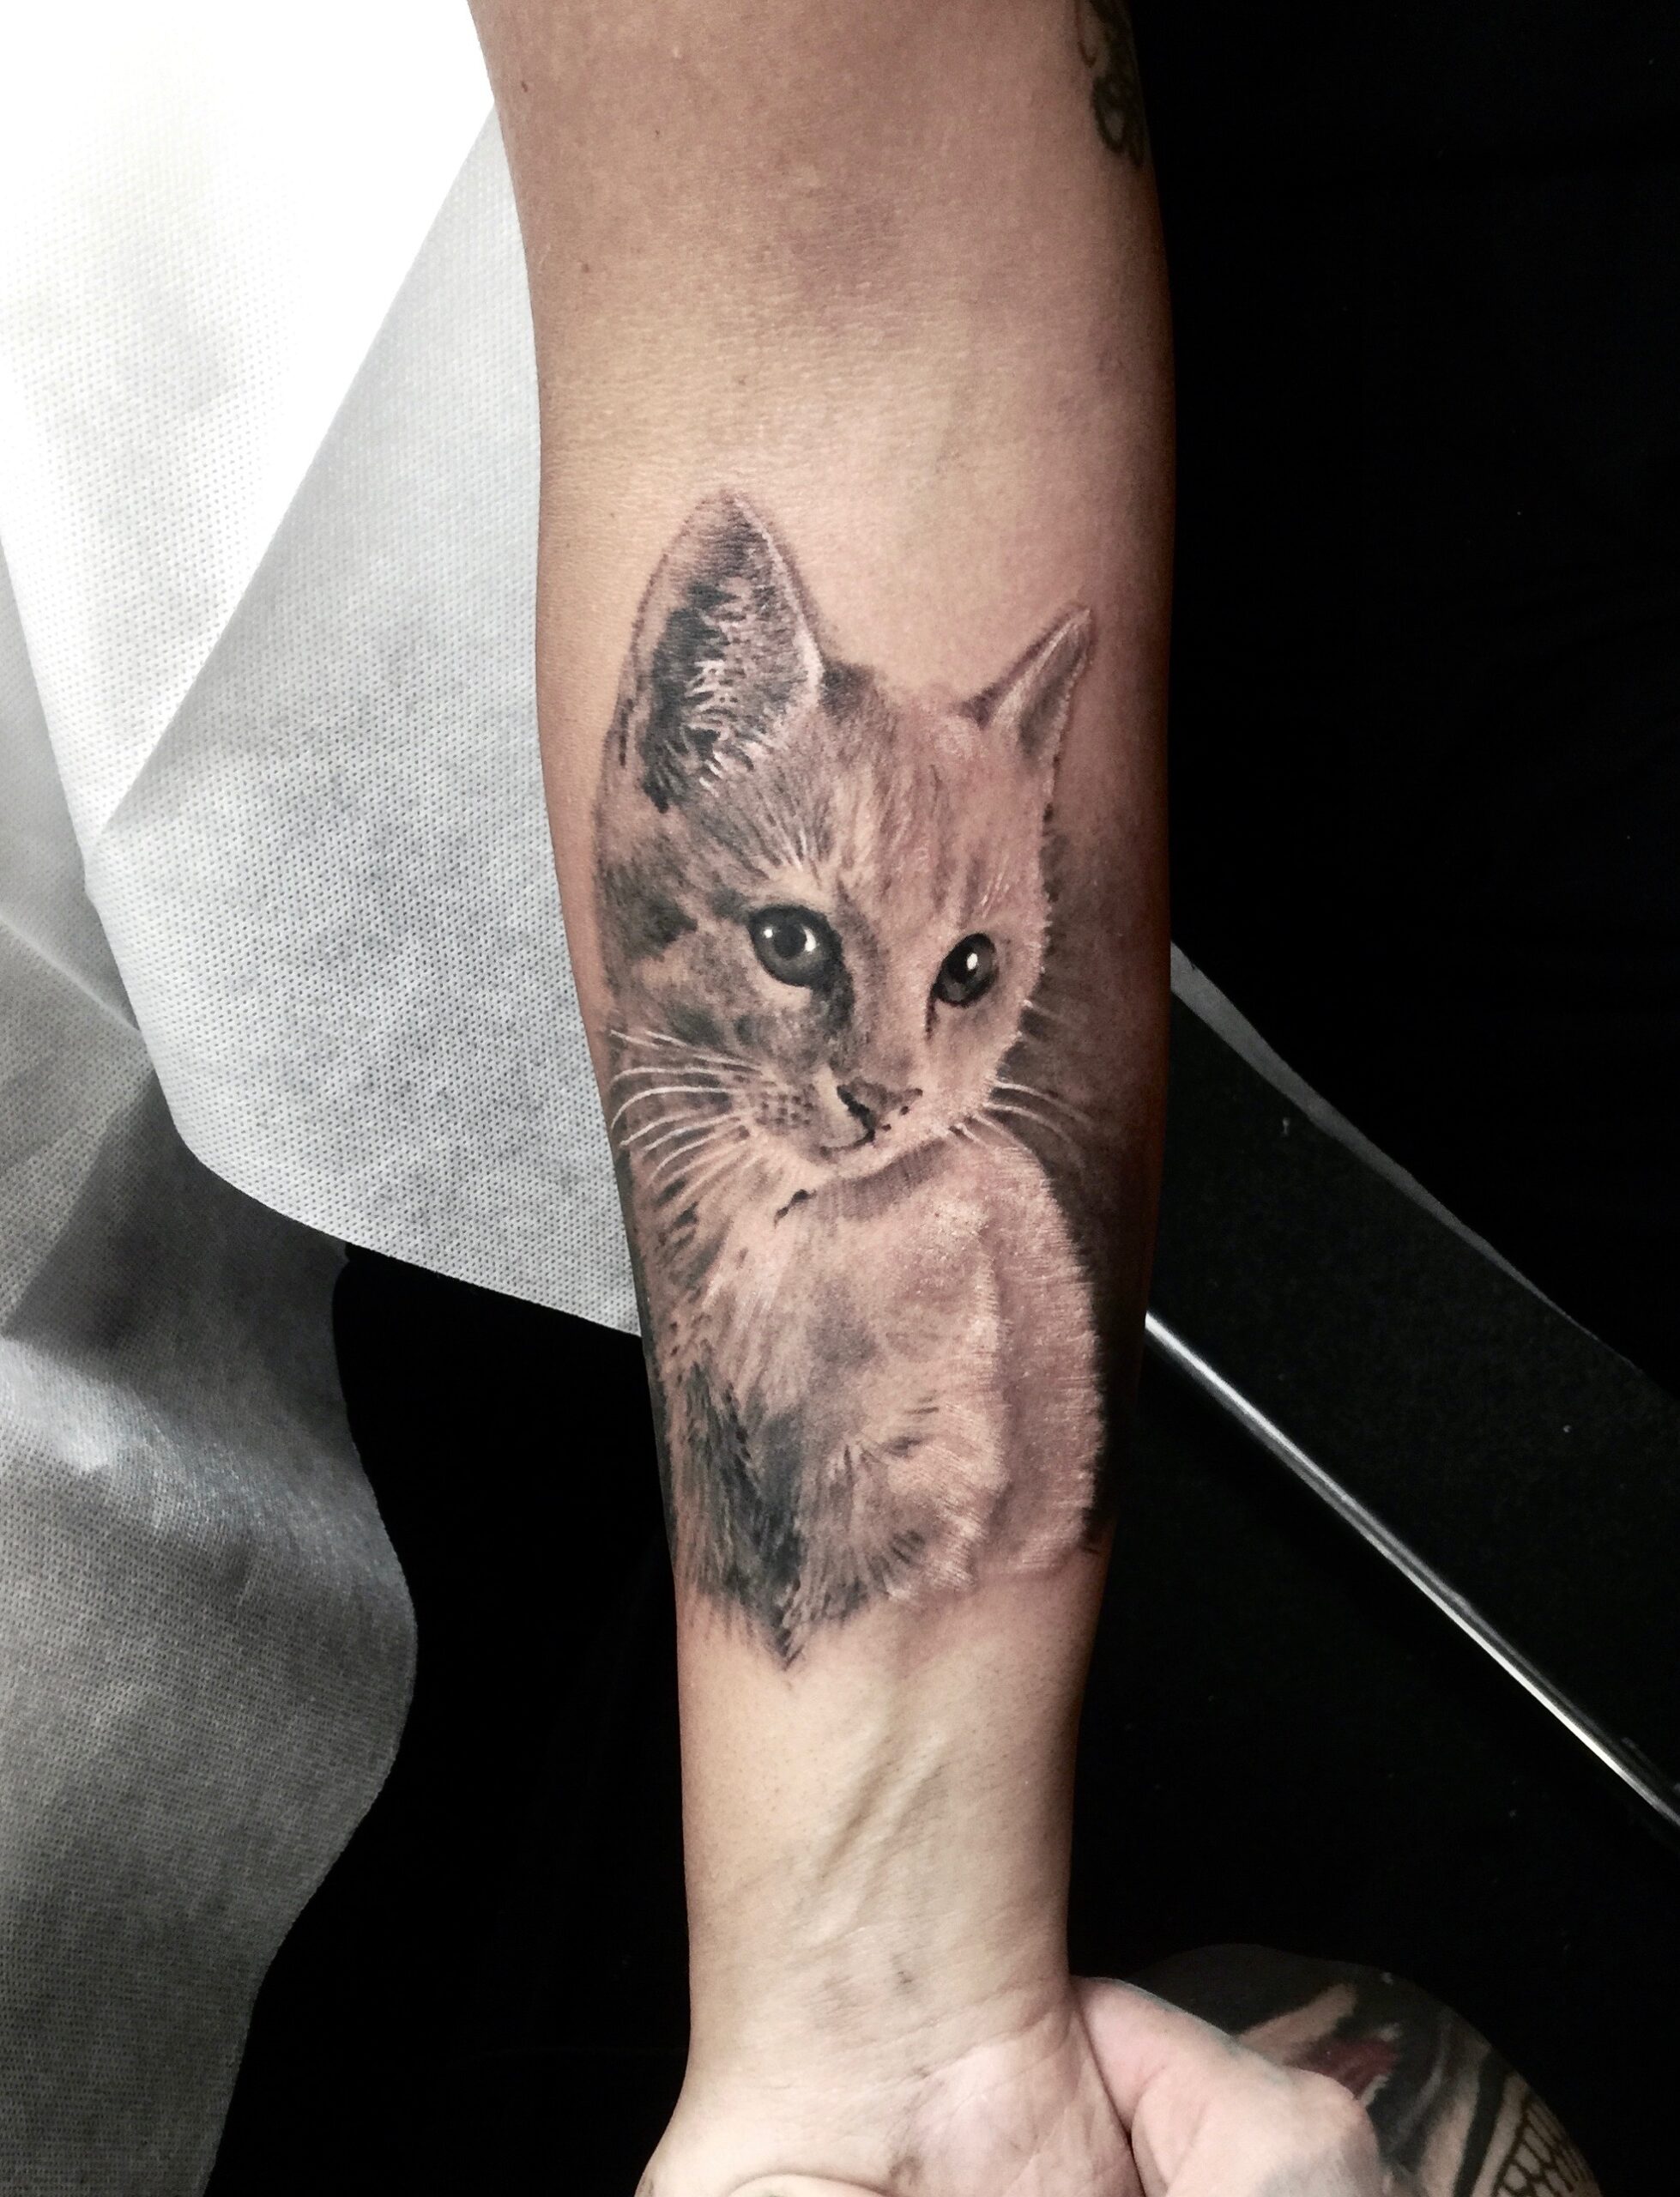 zhuo dan ting tattoo work cat tattoo卓丹婷纹身作品 猫咪纹身 1